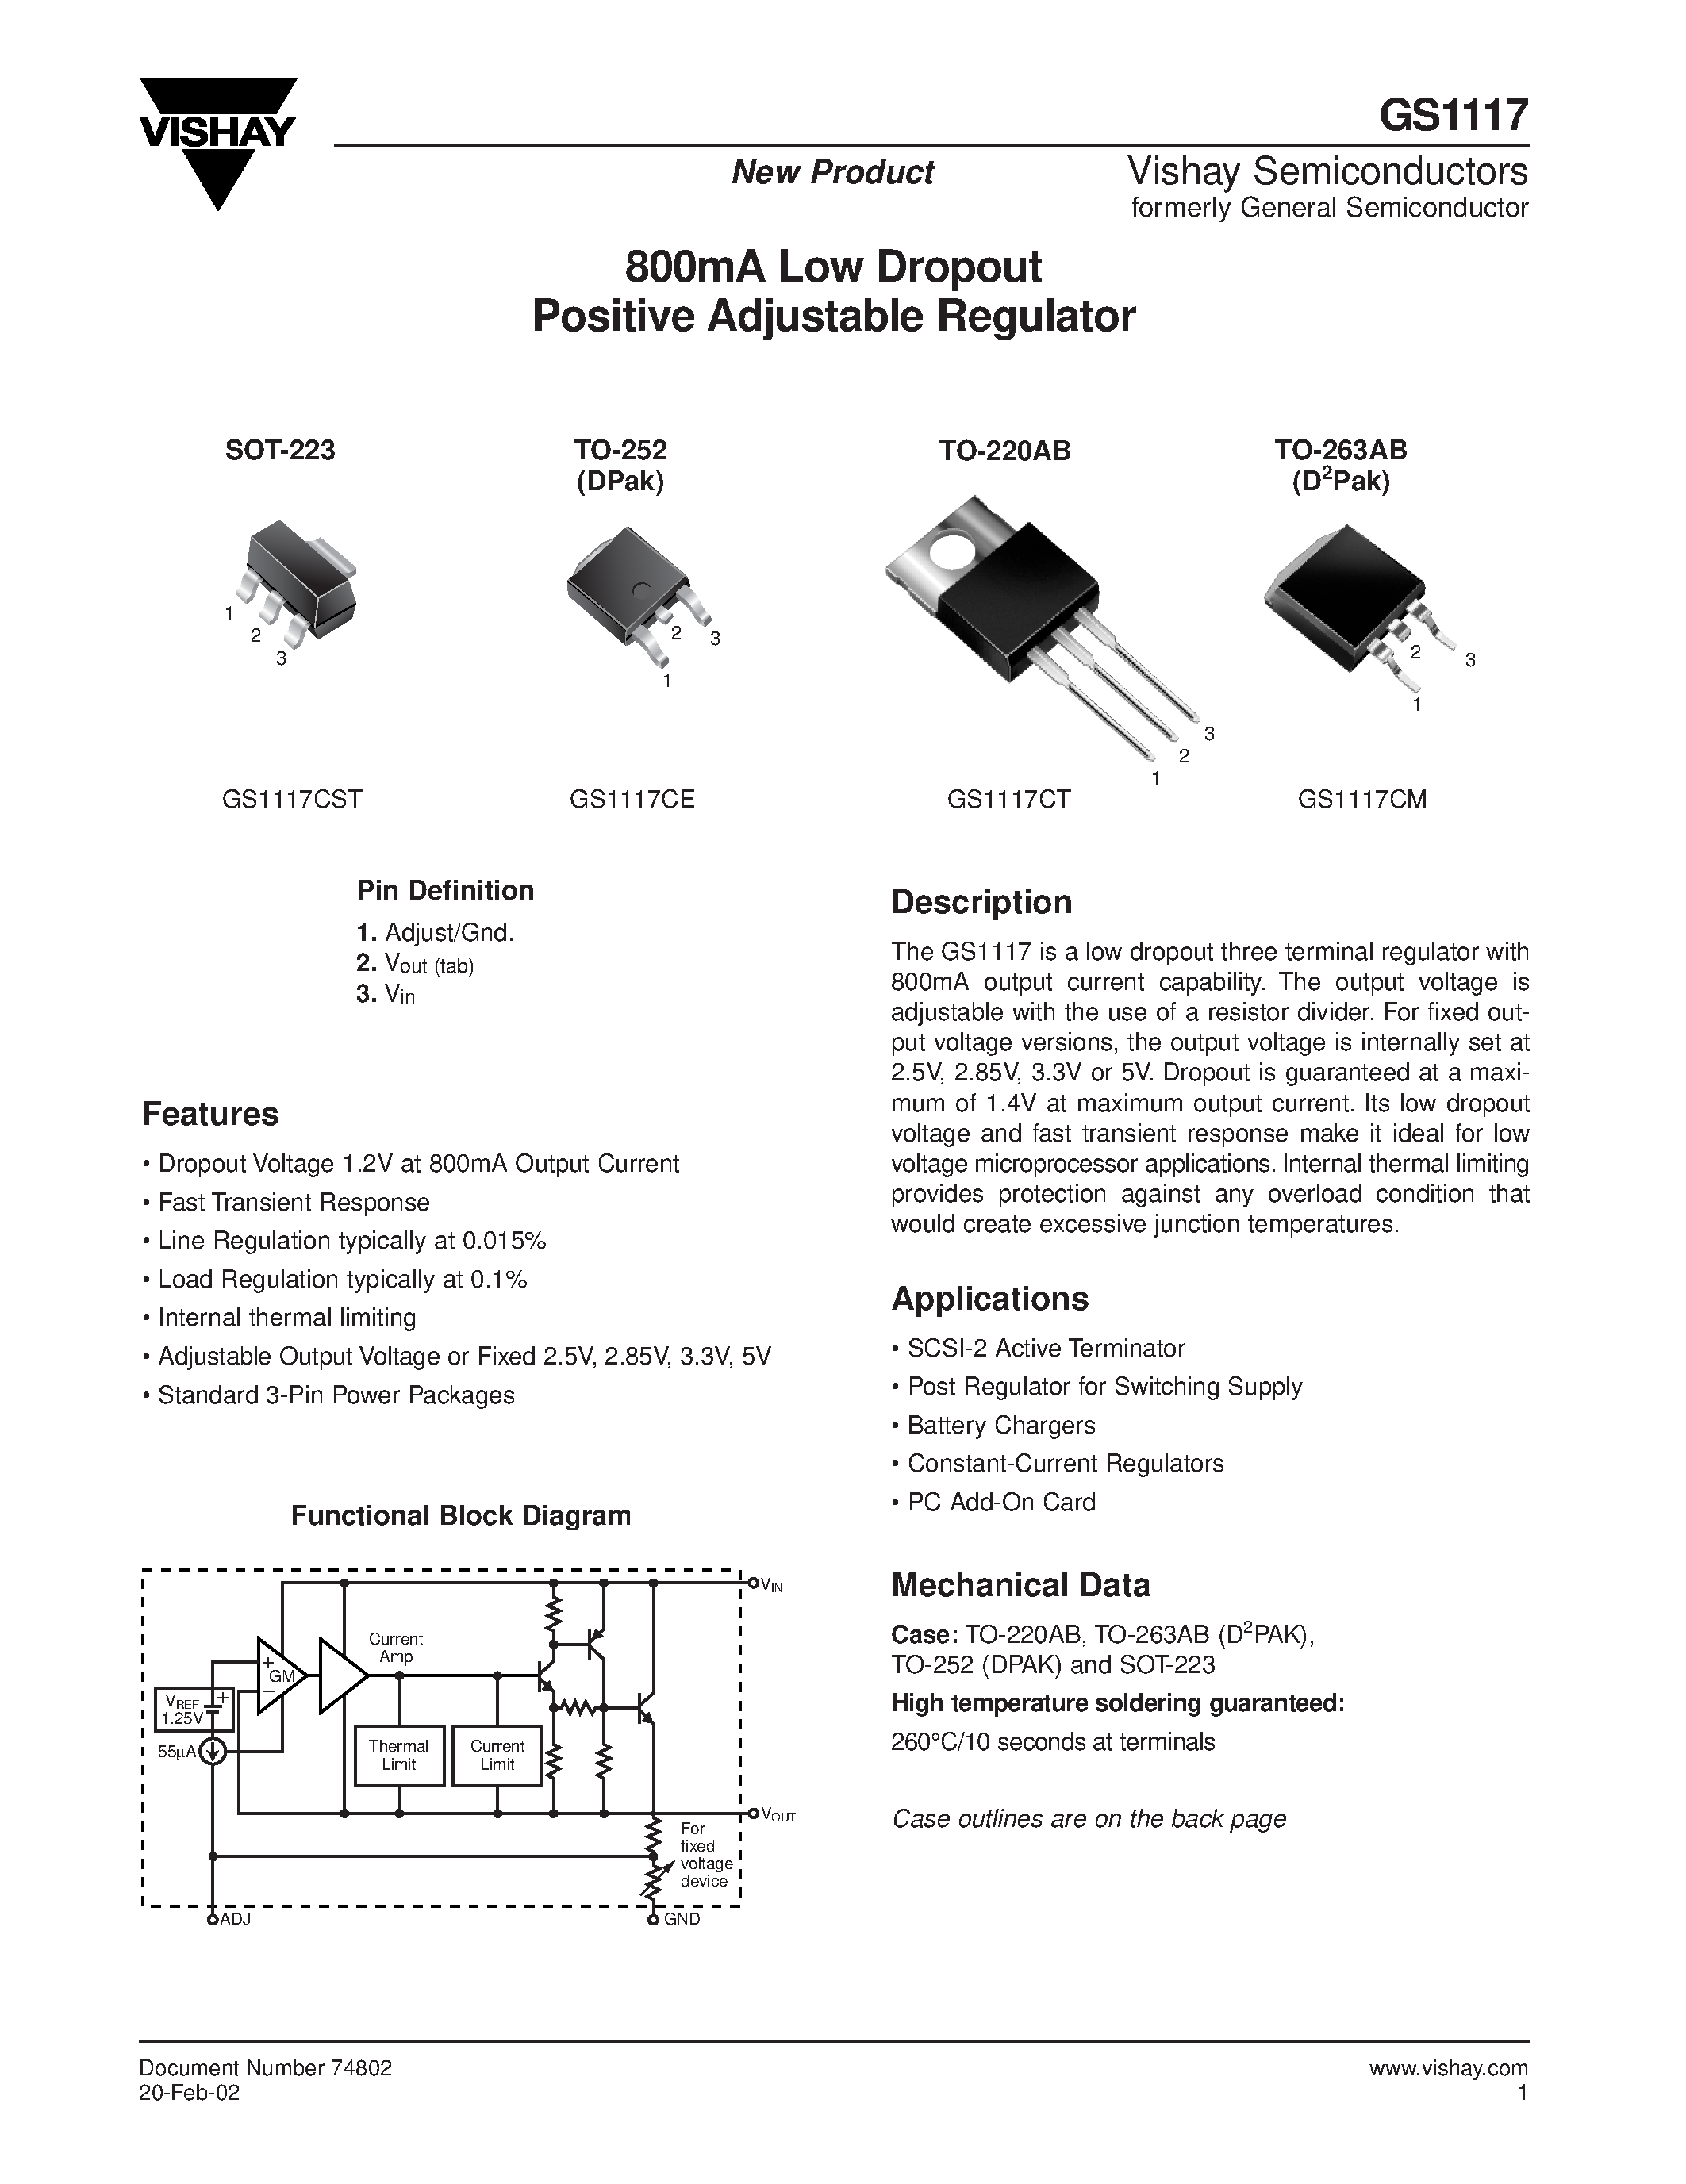 Datasheet 74802 - 800mA Low Dropout Positive Adjustable Regulator page 1